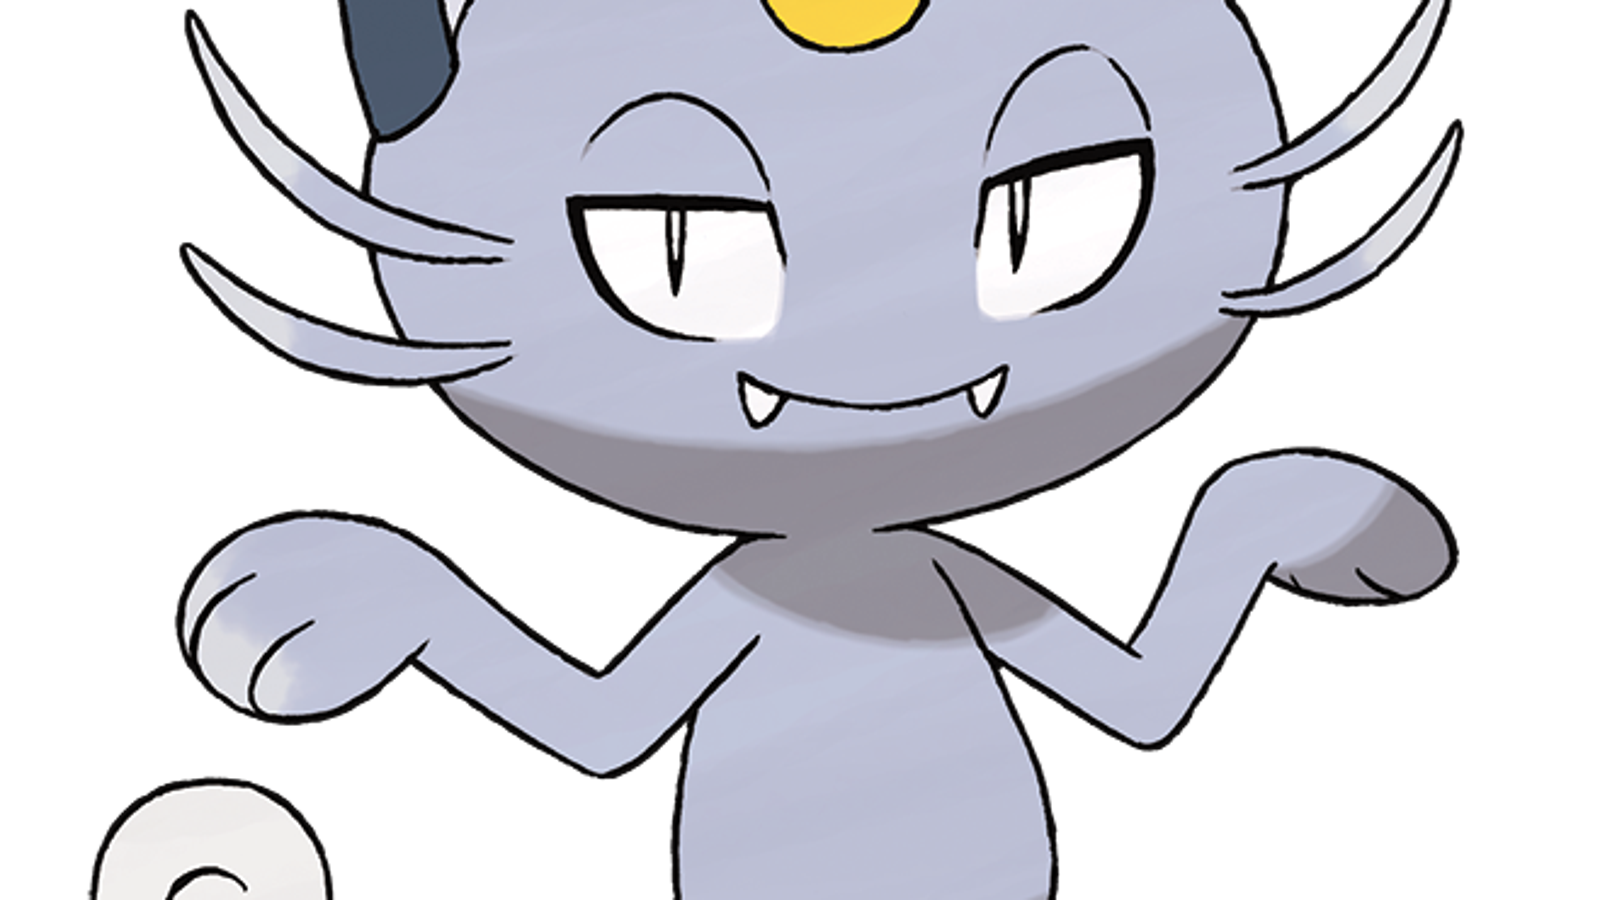 Pokémon Sun & Moon 62 - O Meowth Escuro é um Alola Meowth